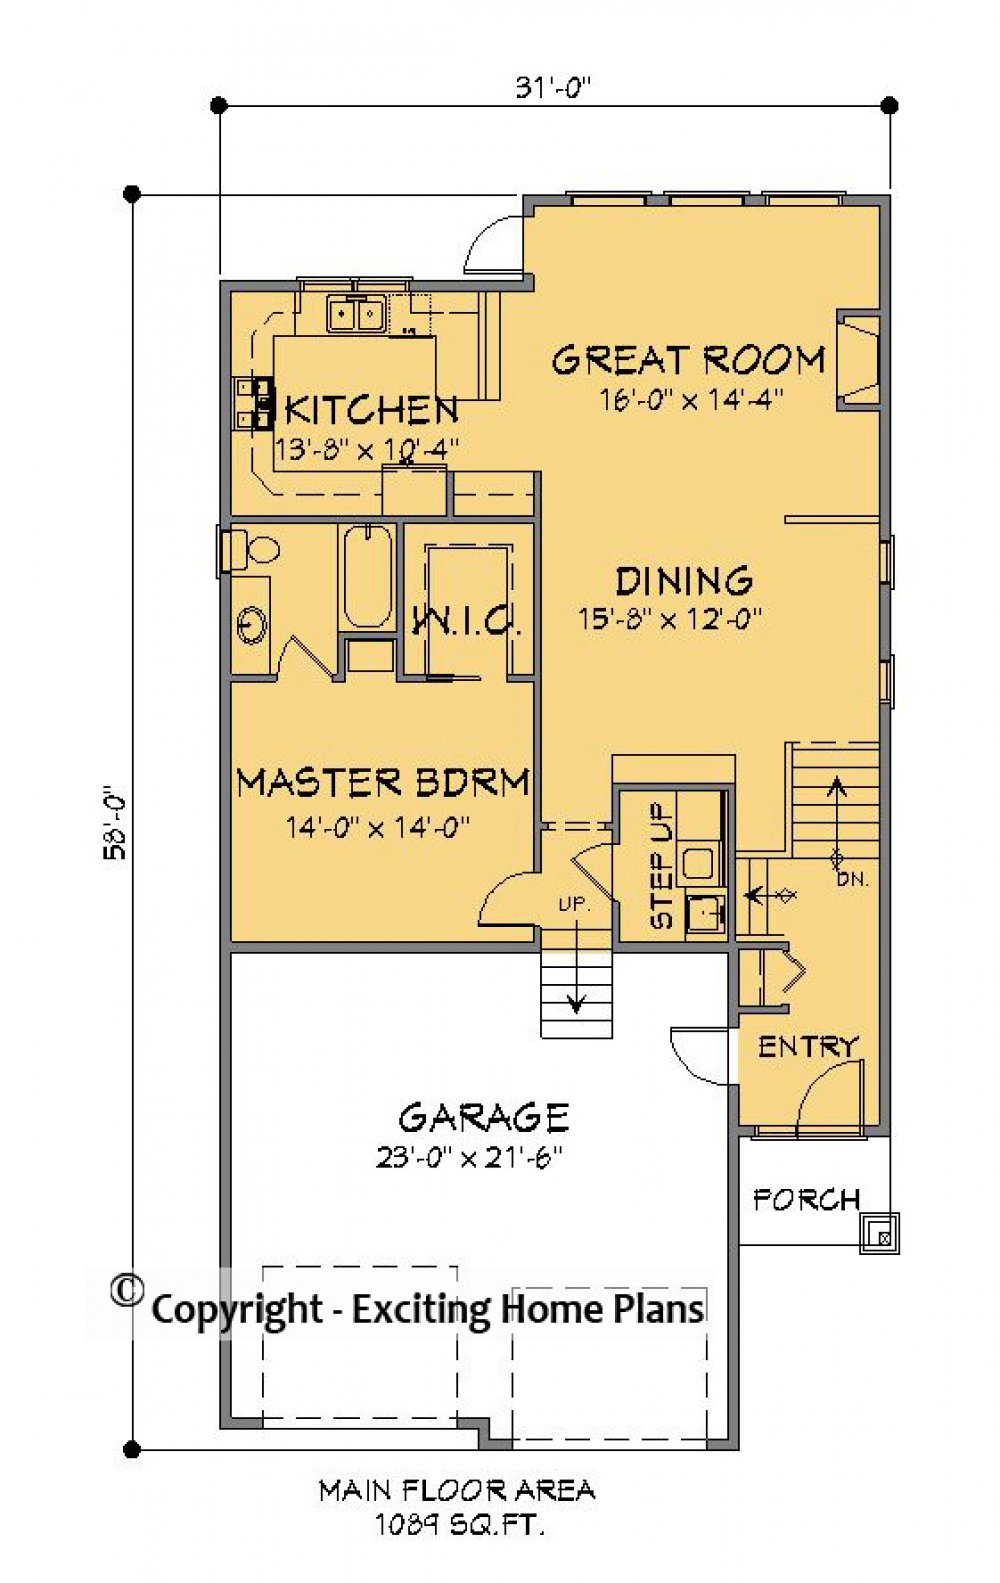 House Plan E1715-10  Main Floor Plan